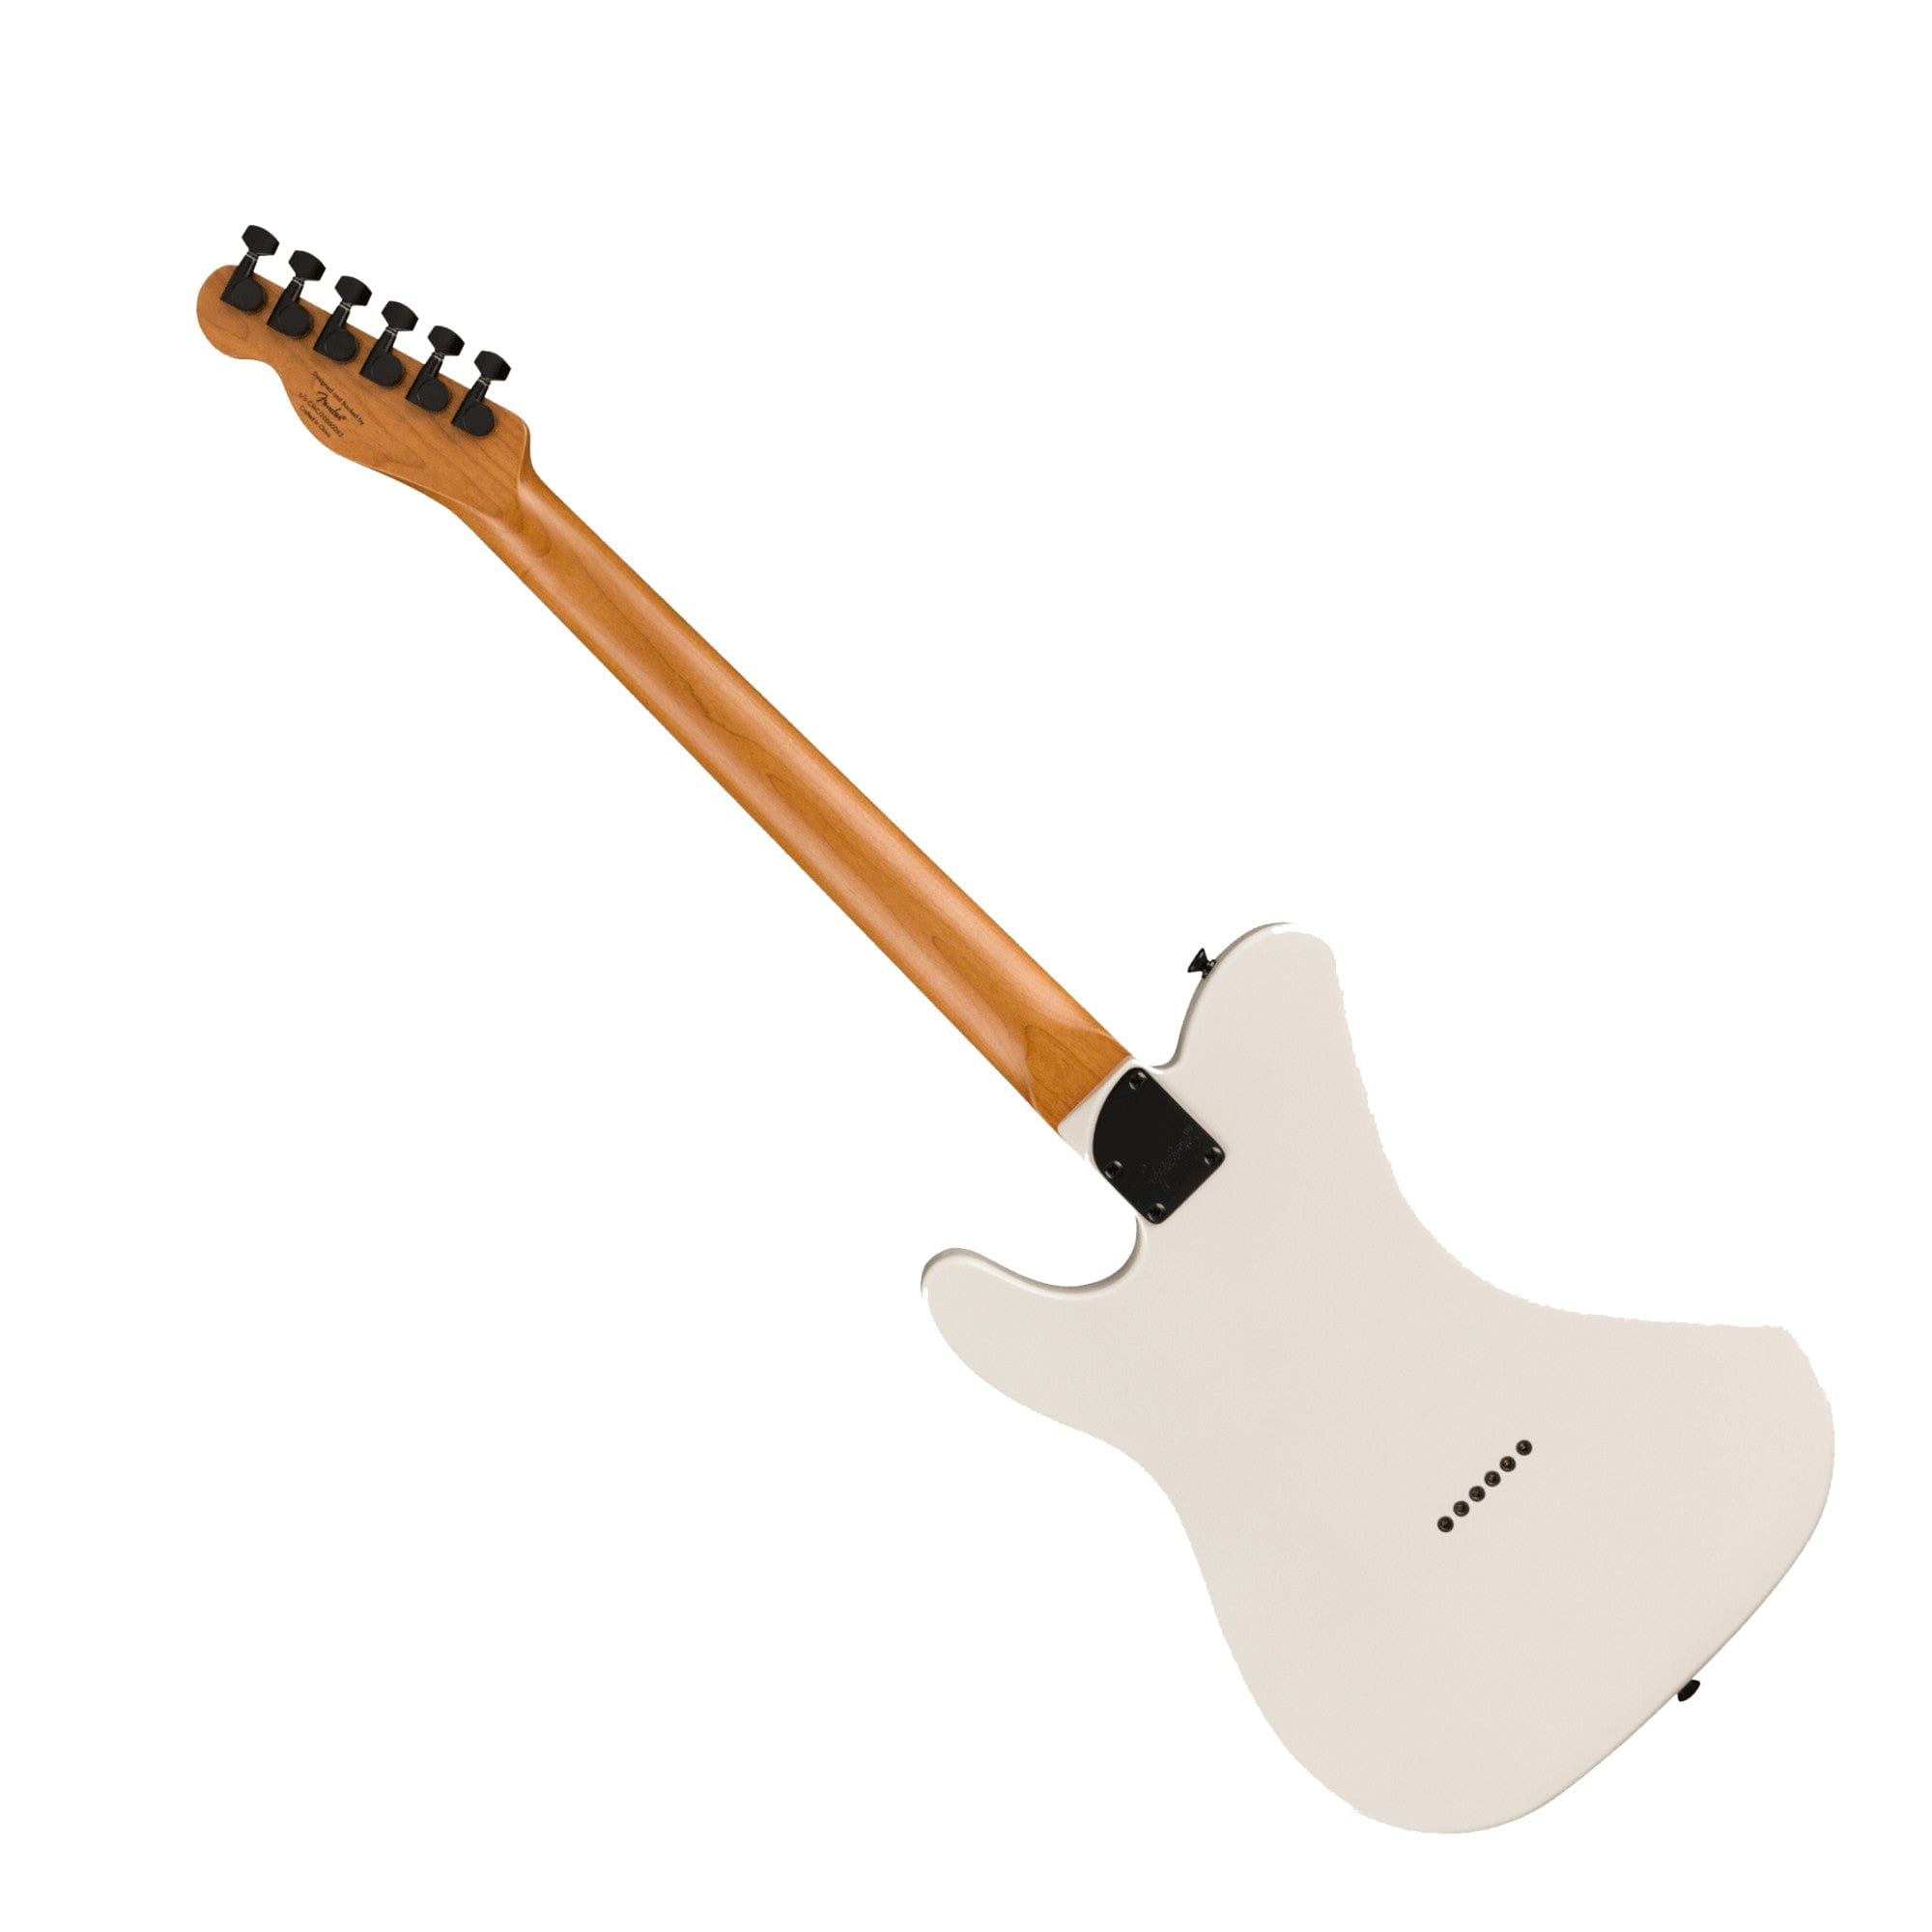 Squier Contemporary Telecaster RH RMN Pearl White Guitar